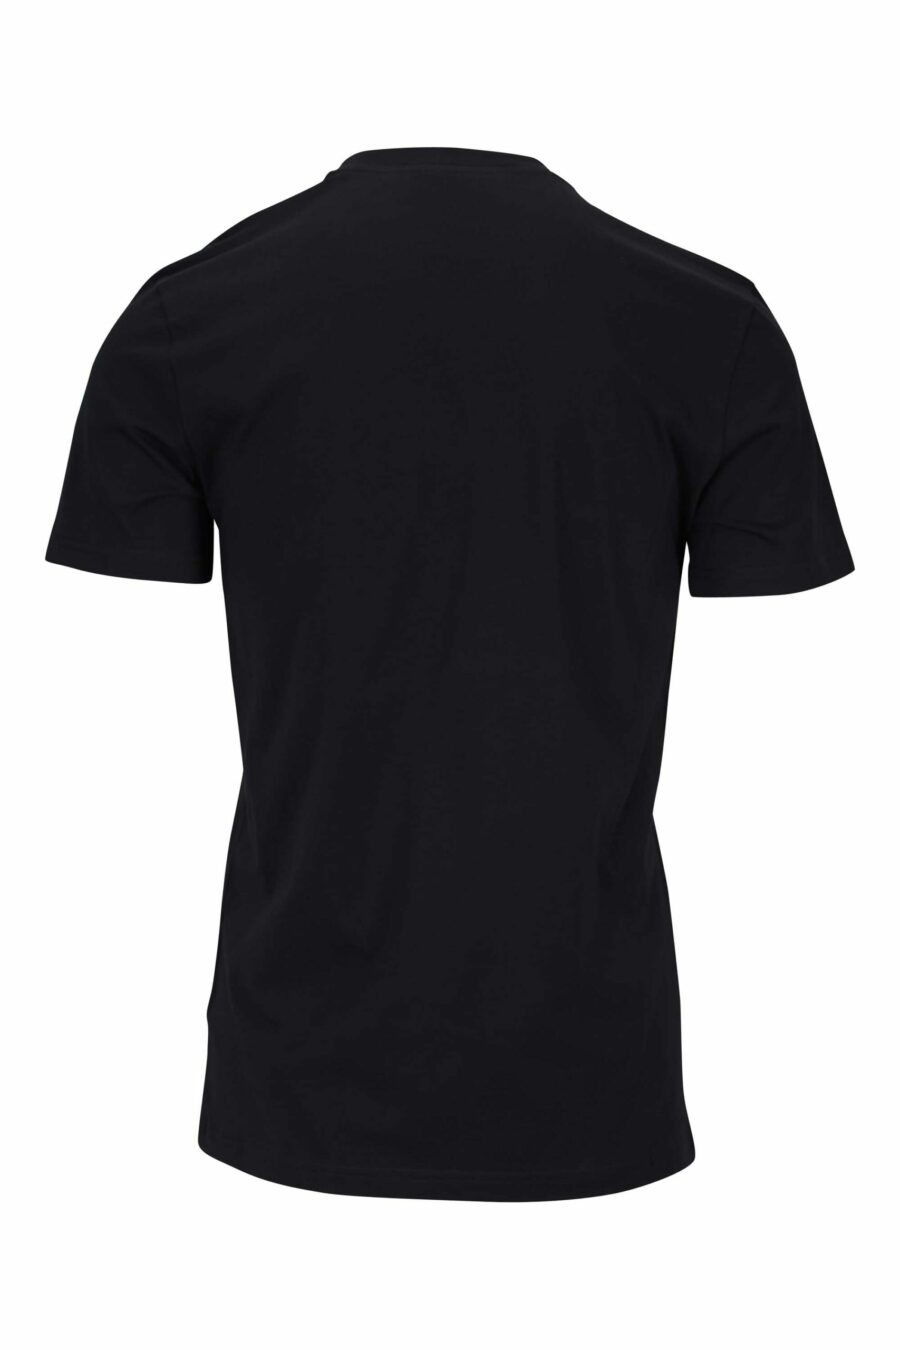 Black organic cotton T-shirt with classic black maxilogue - 667113391595 1 scaled